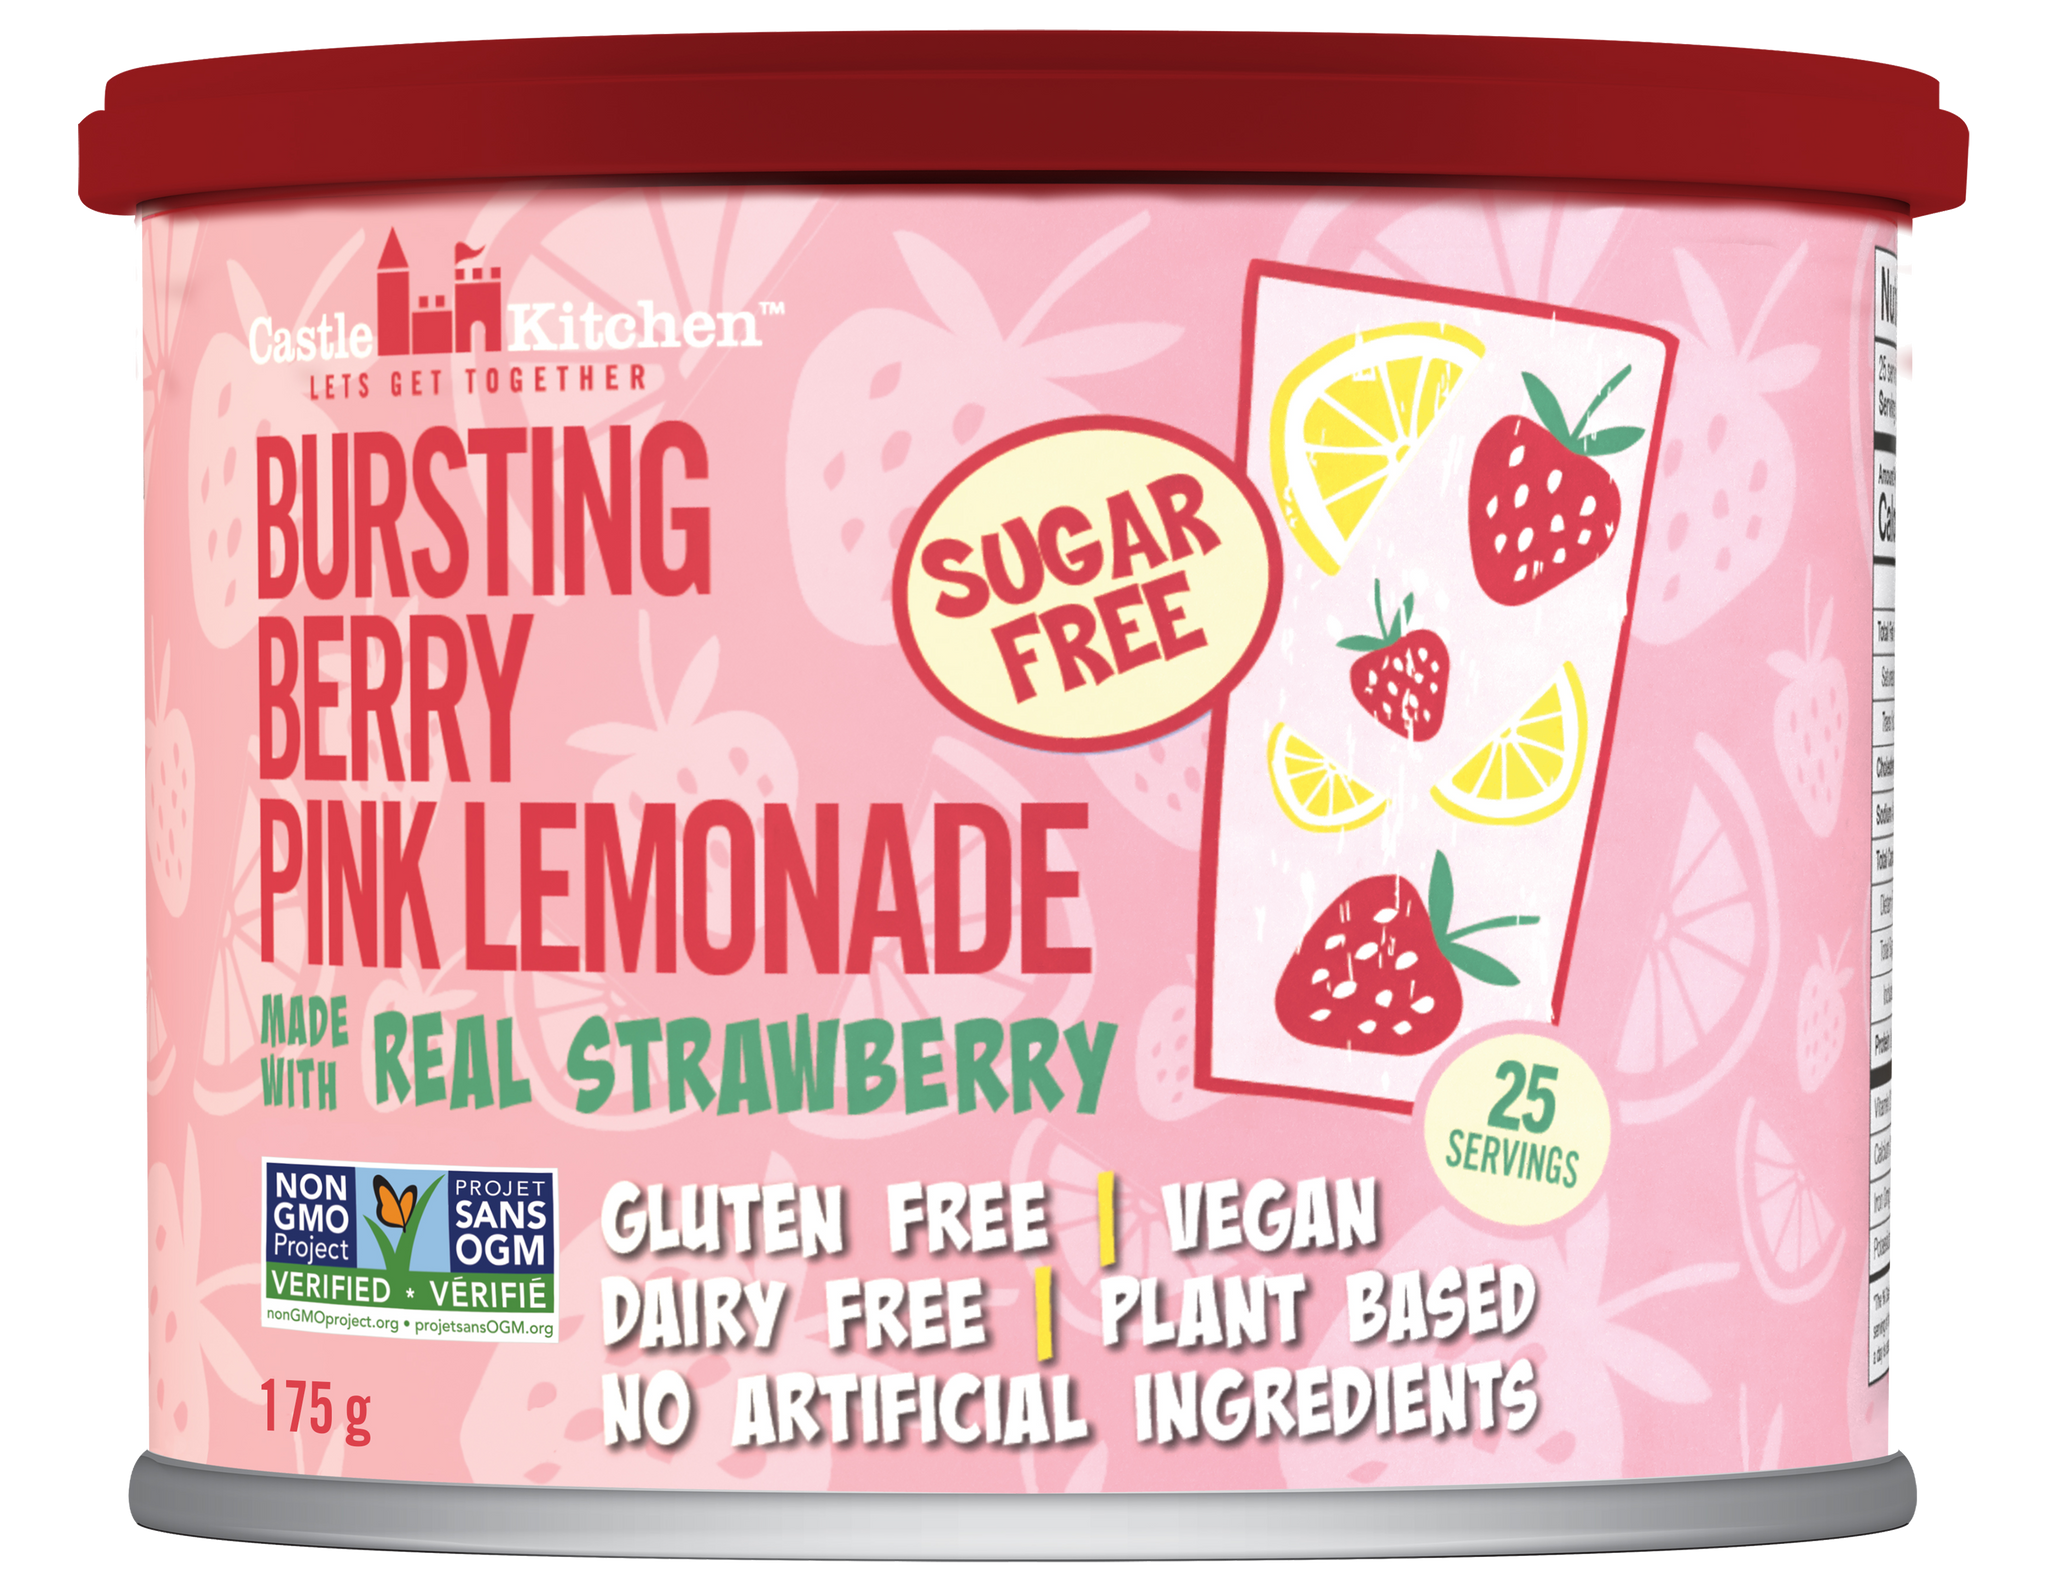 Sugar Free Bursting Berry Pink Lemonade